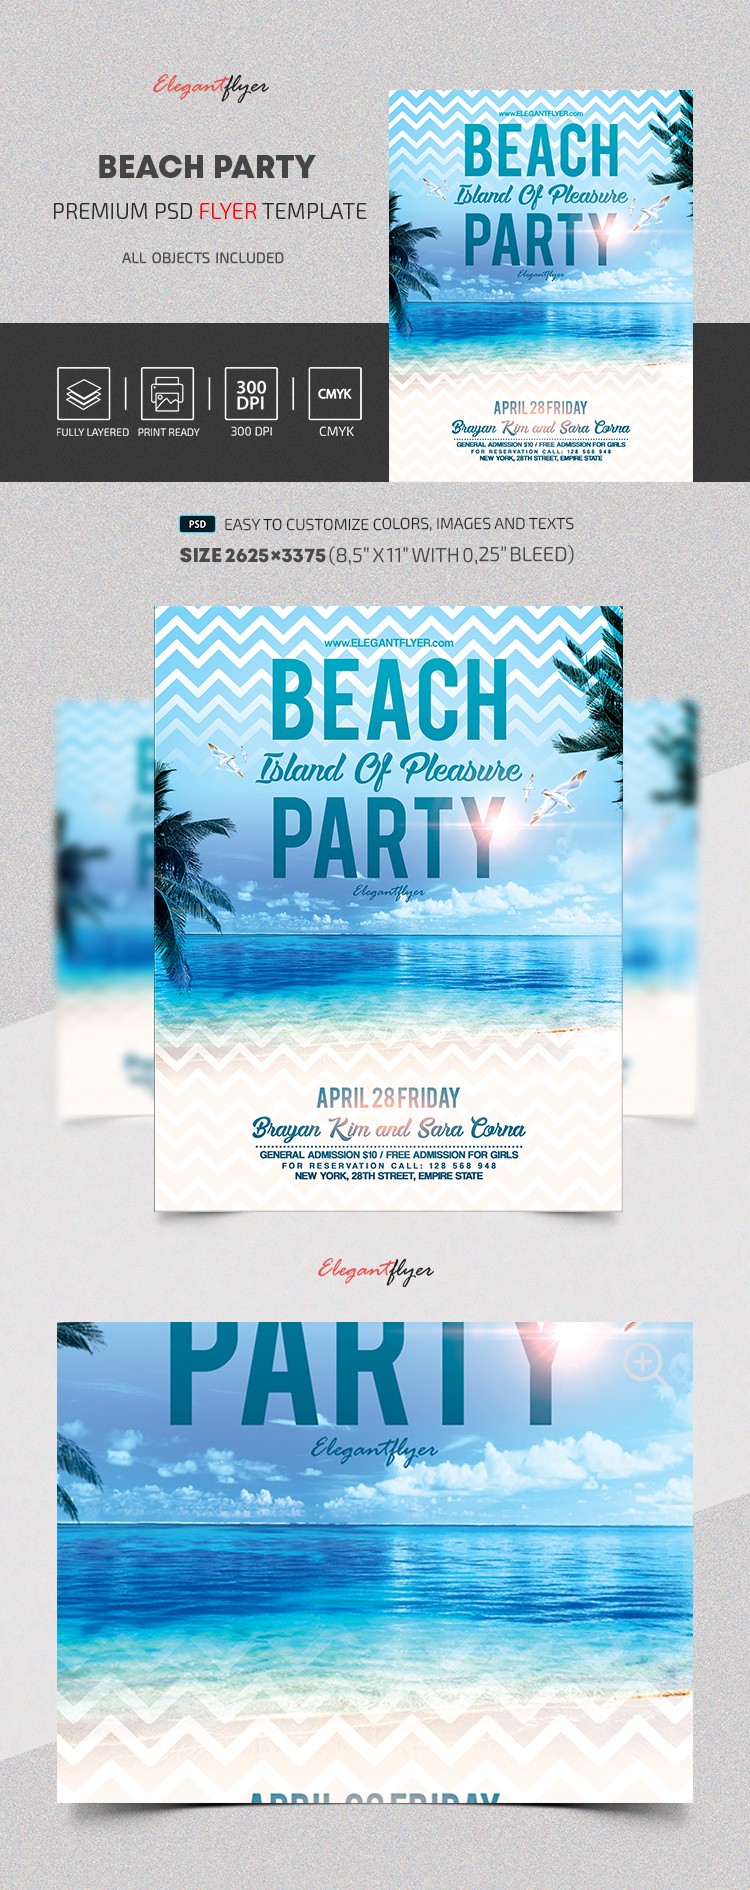 Beach Party Island Of Pleasure by ElegantFlyer